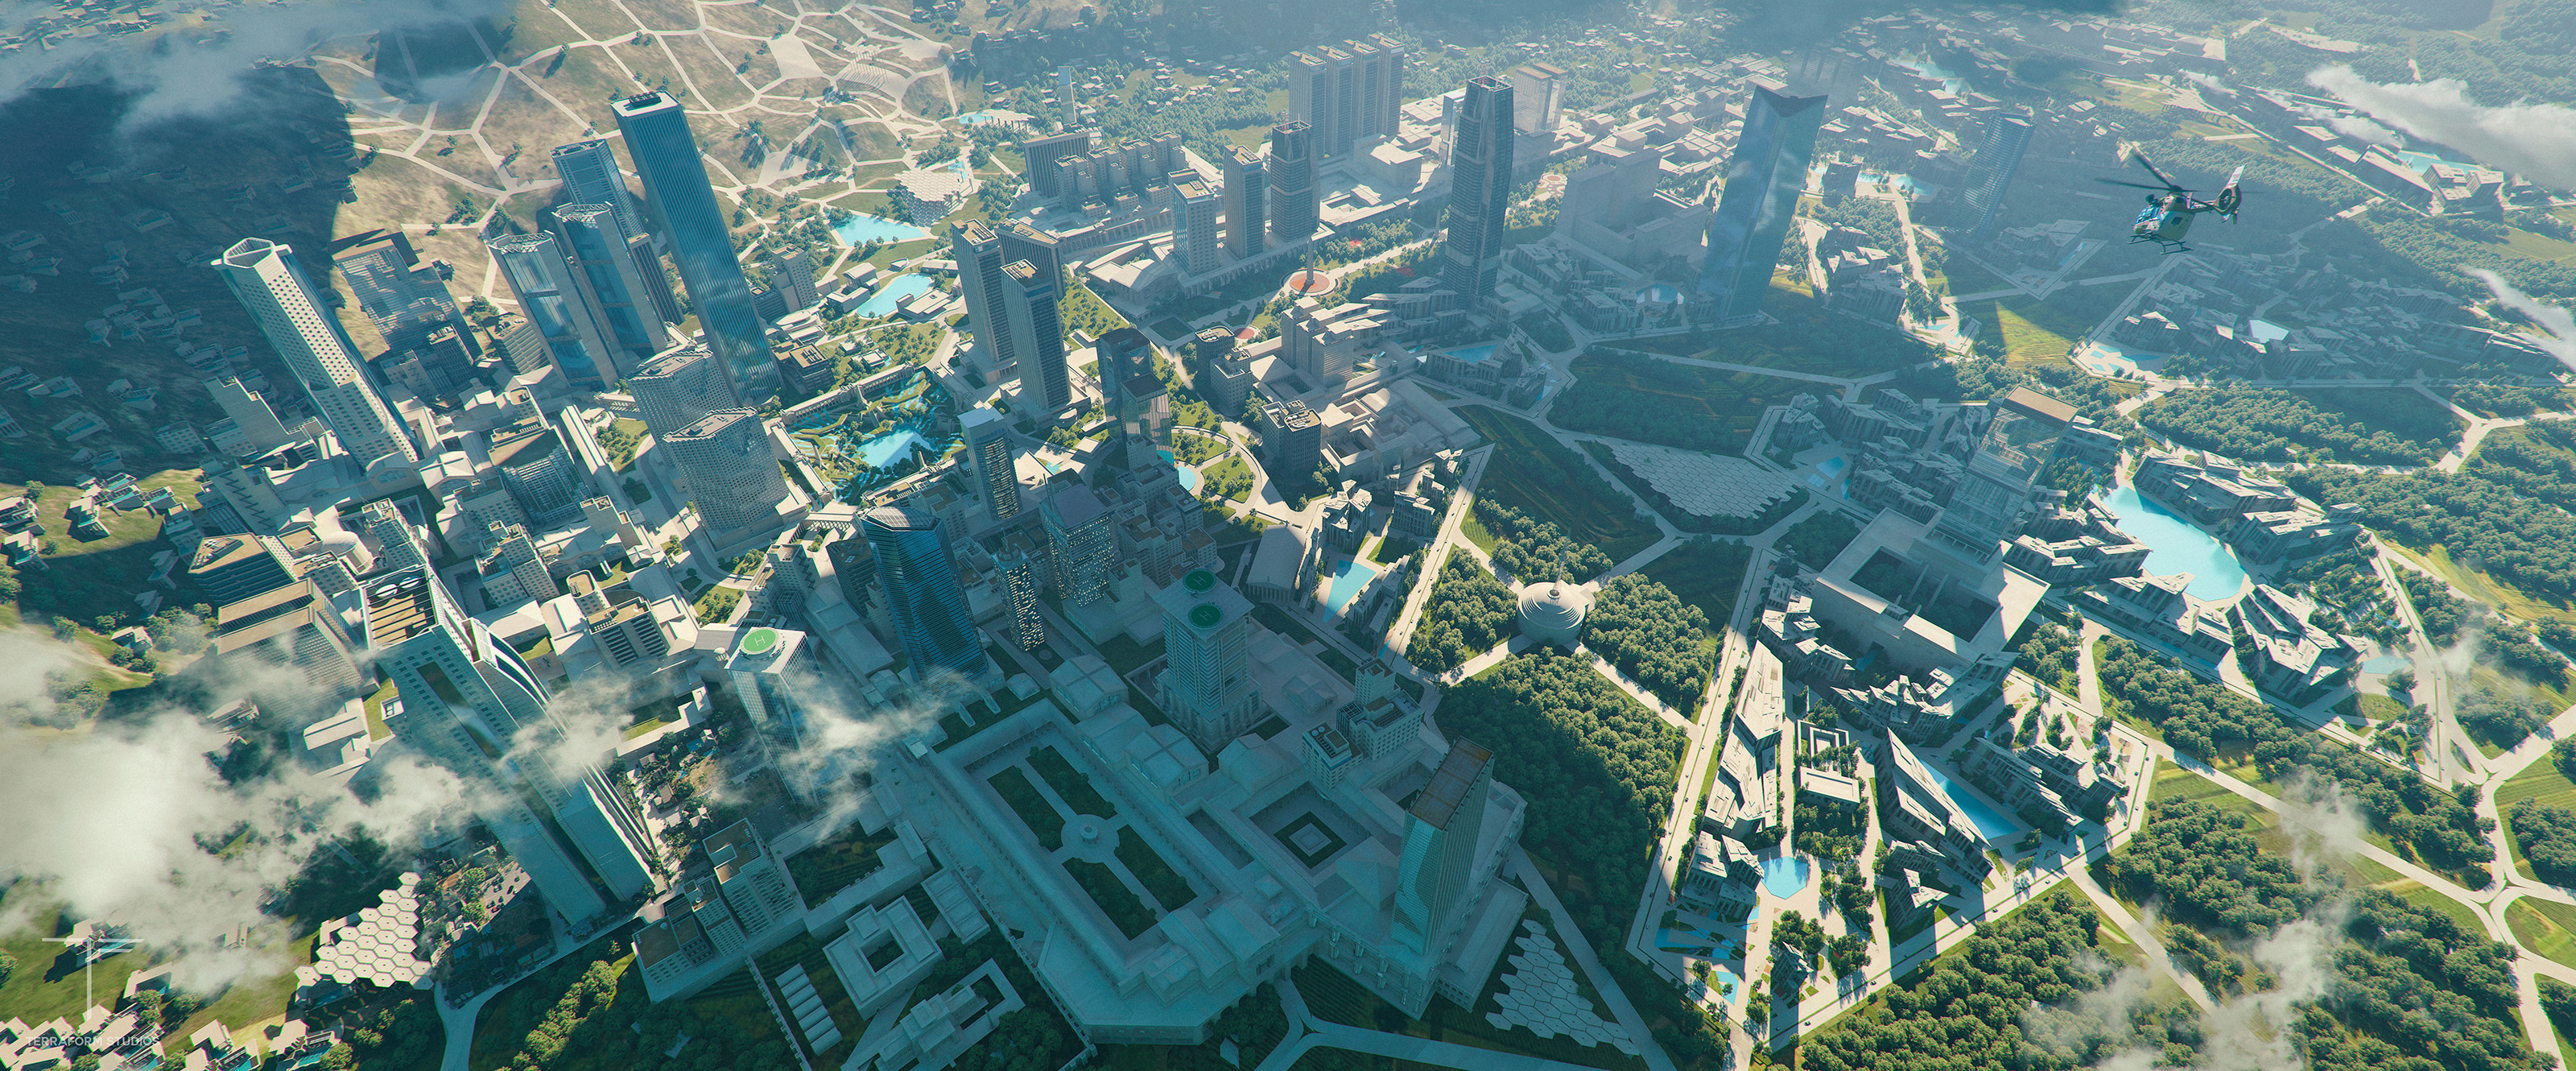 Artwork Digital Art Aerial View Cityscape 3200x1330